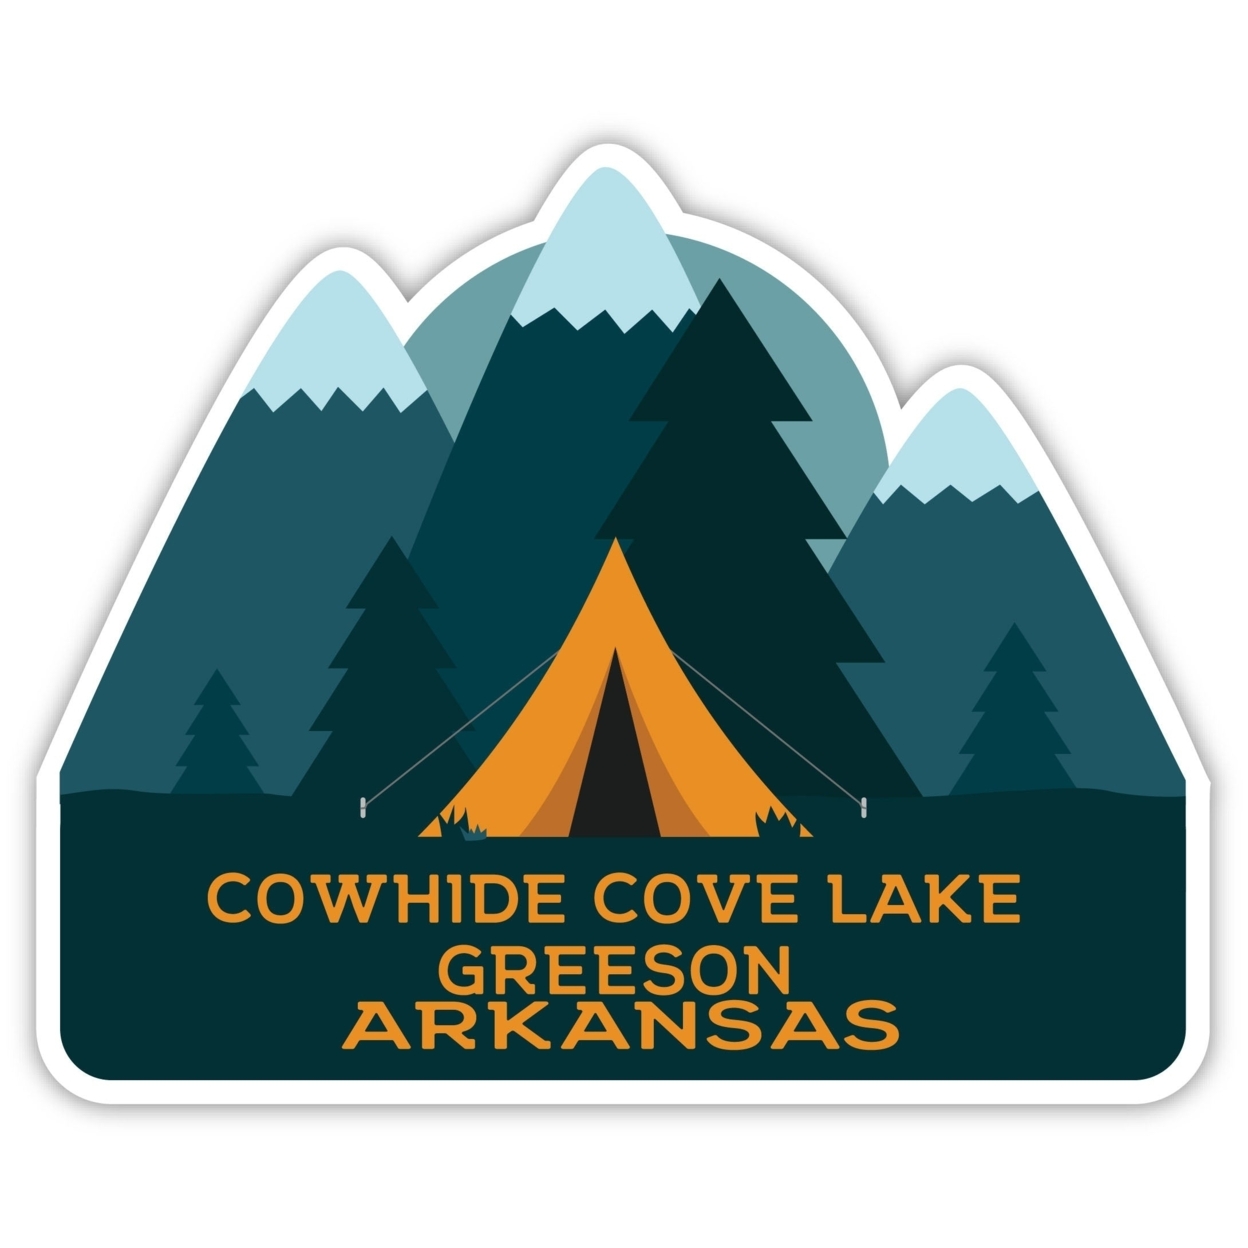 Cowhide Cove Lake Greeson Arkansas Souvenir Decorative Stickers (Choose Theme And Size) - Single Unit, 6-Inch, Tent